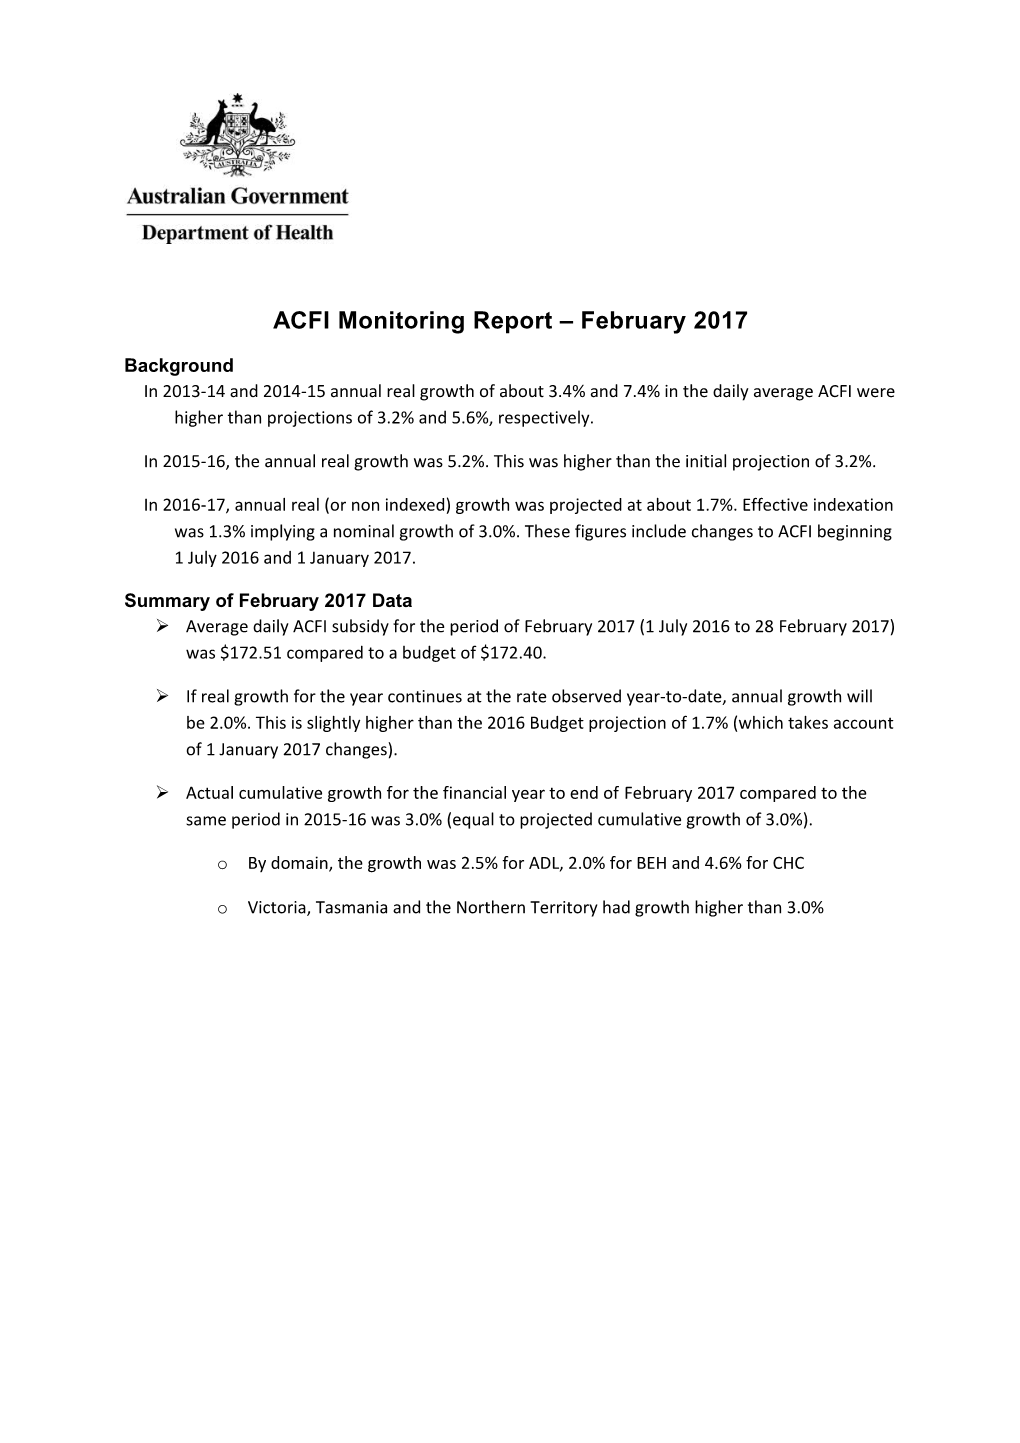 ACFI Monitoring Report Feb